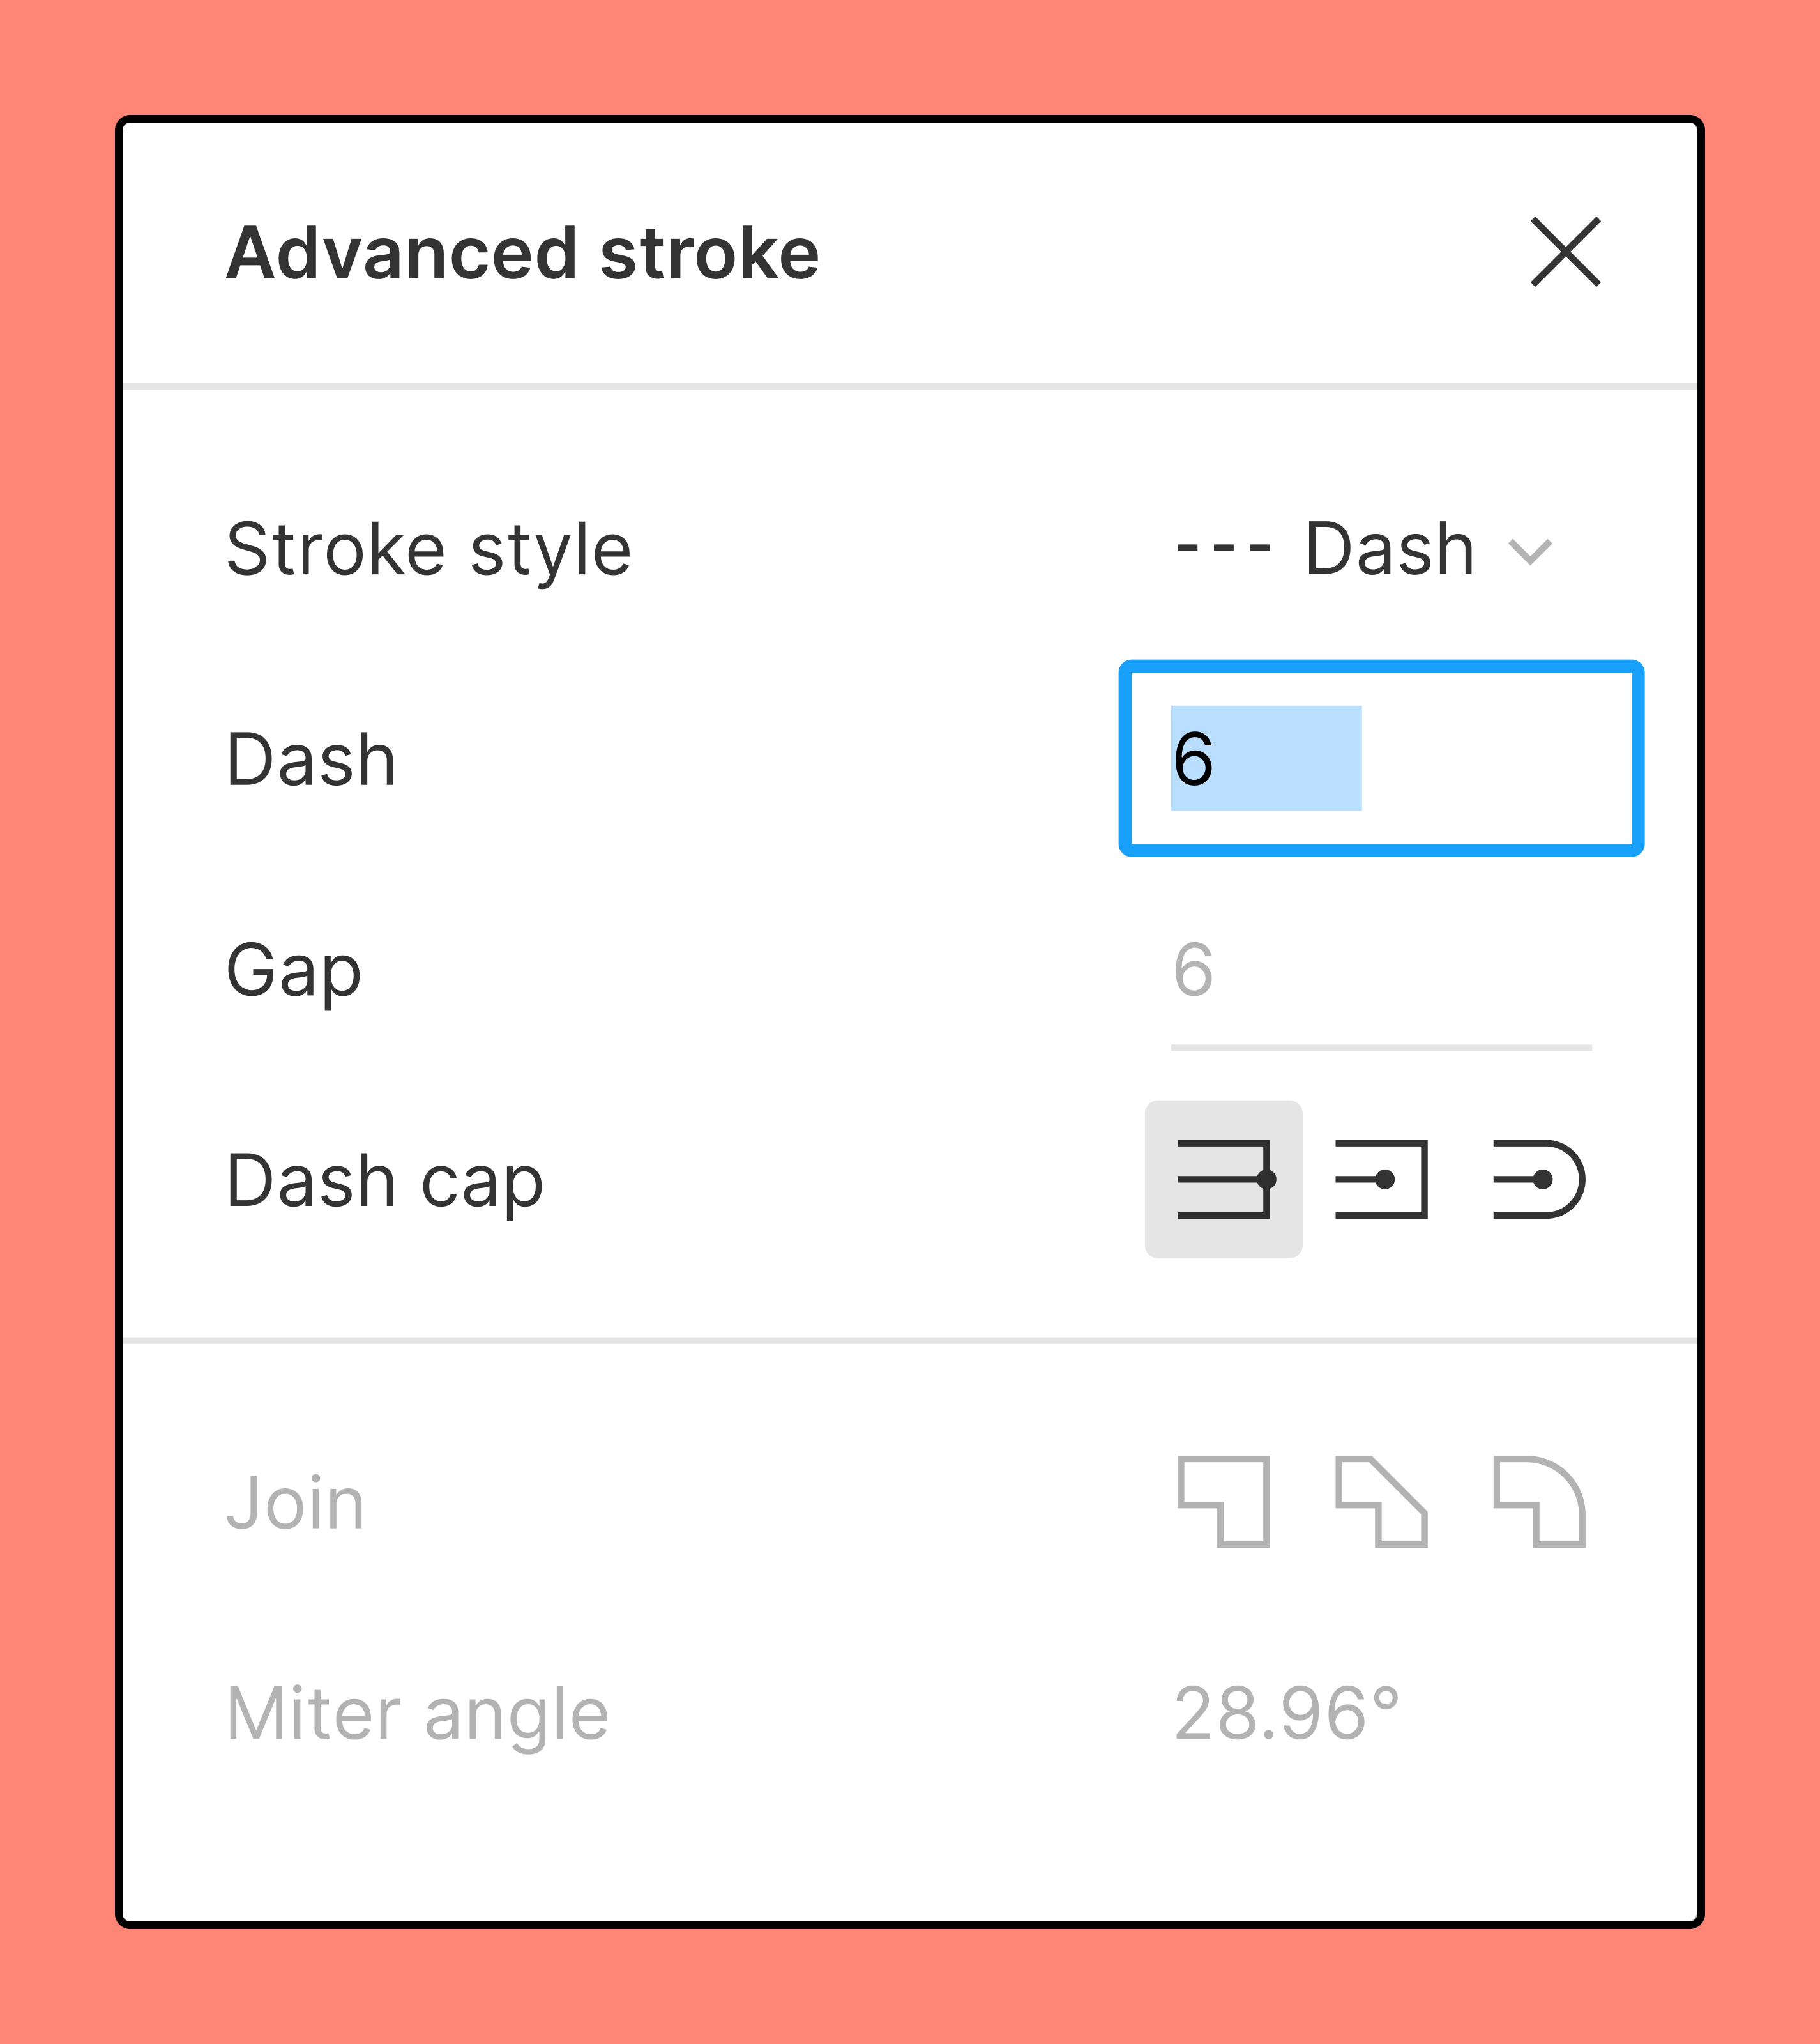 Dash_stroke_settings_in_advanced_stroke_menu.png